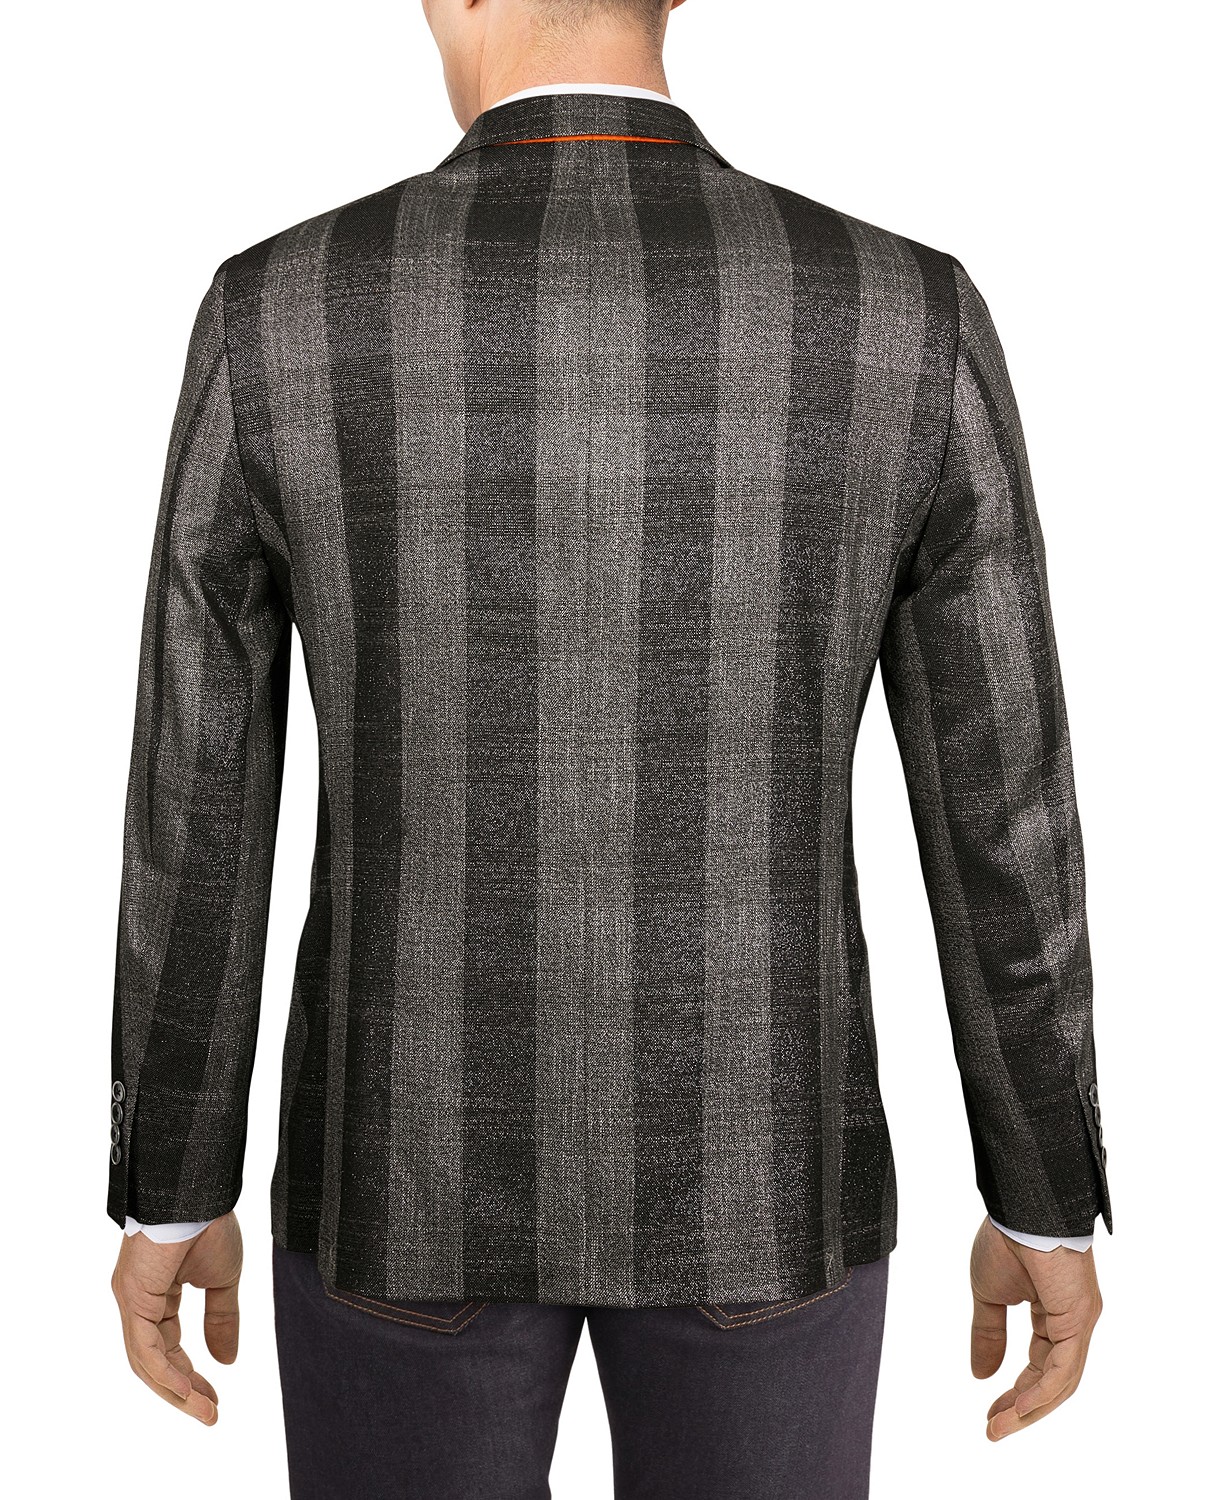 www.couturepoint.com-tallia-mens-gray-black-metallic-plaid-slim-fit-long-sport-coat-blazer